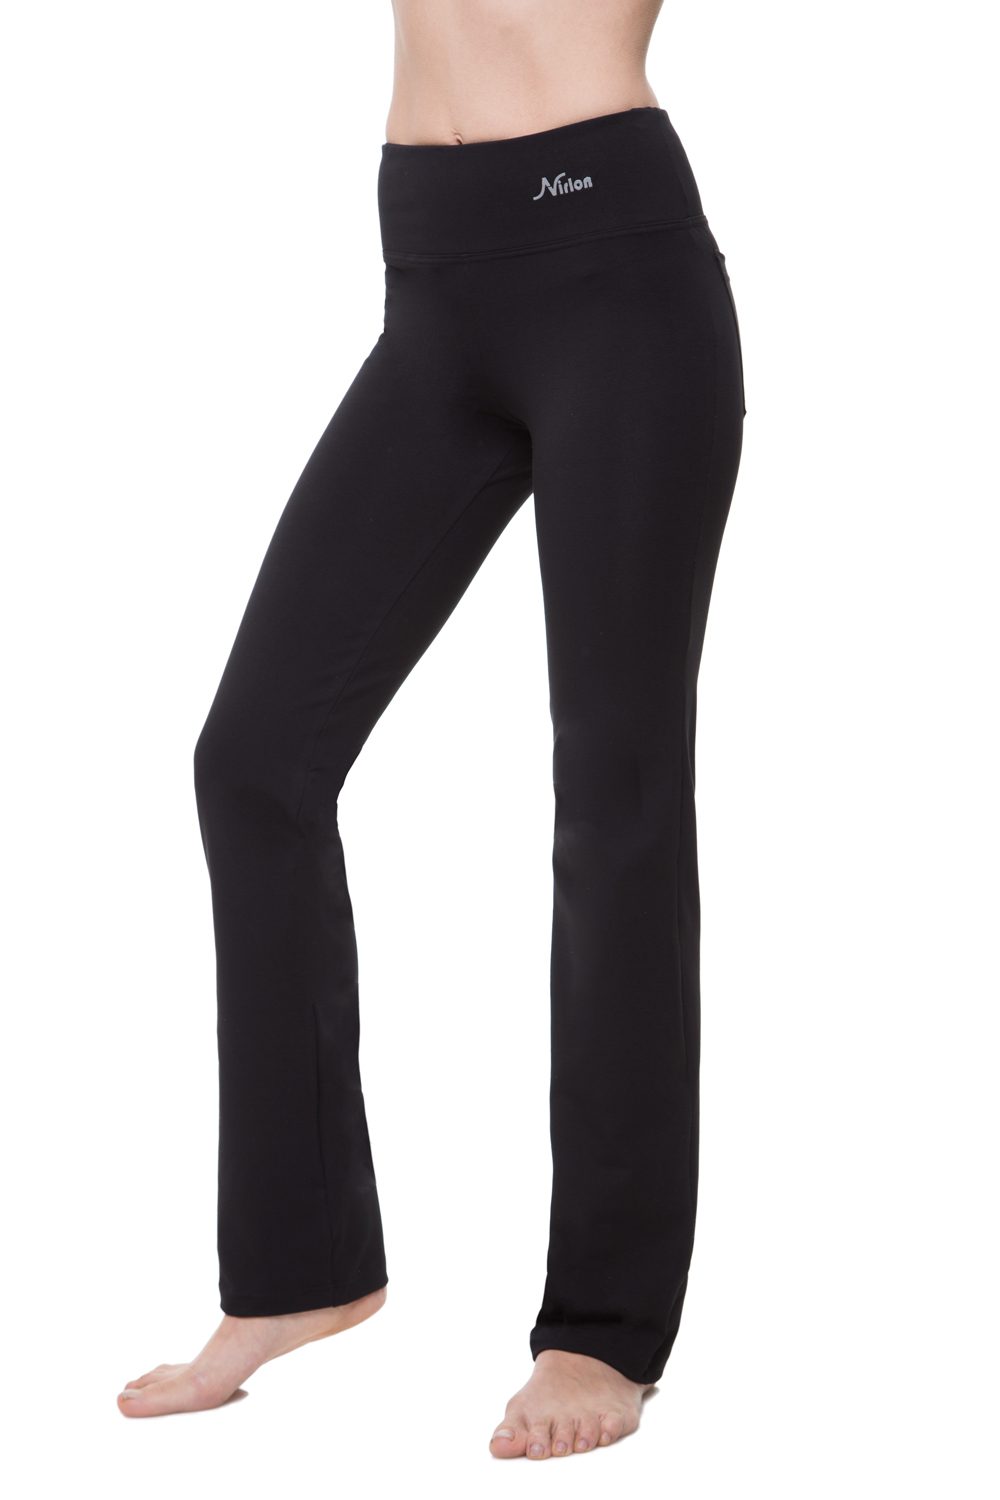 Straight Leg Yoga Pants With Pockets for Women – Black – Nirlon